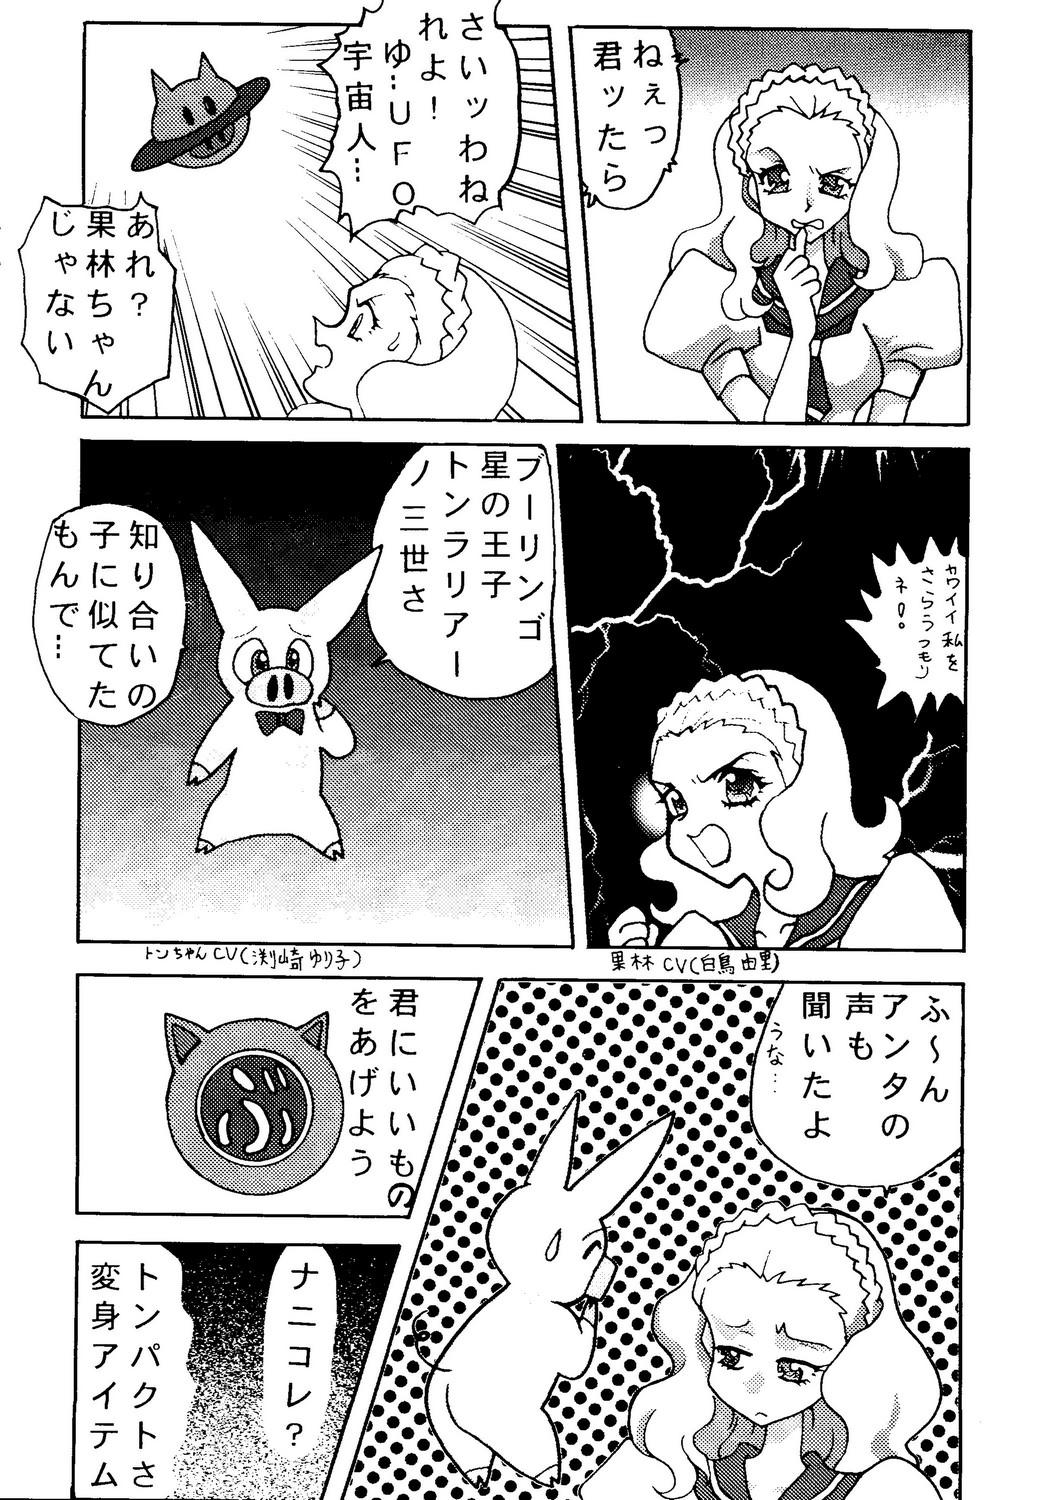 Morena VS-X - Pokemon Gaogaigar Revolutionary girl utena Tonde buurin Public - Page 7